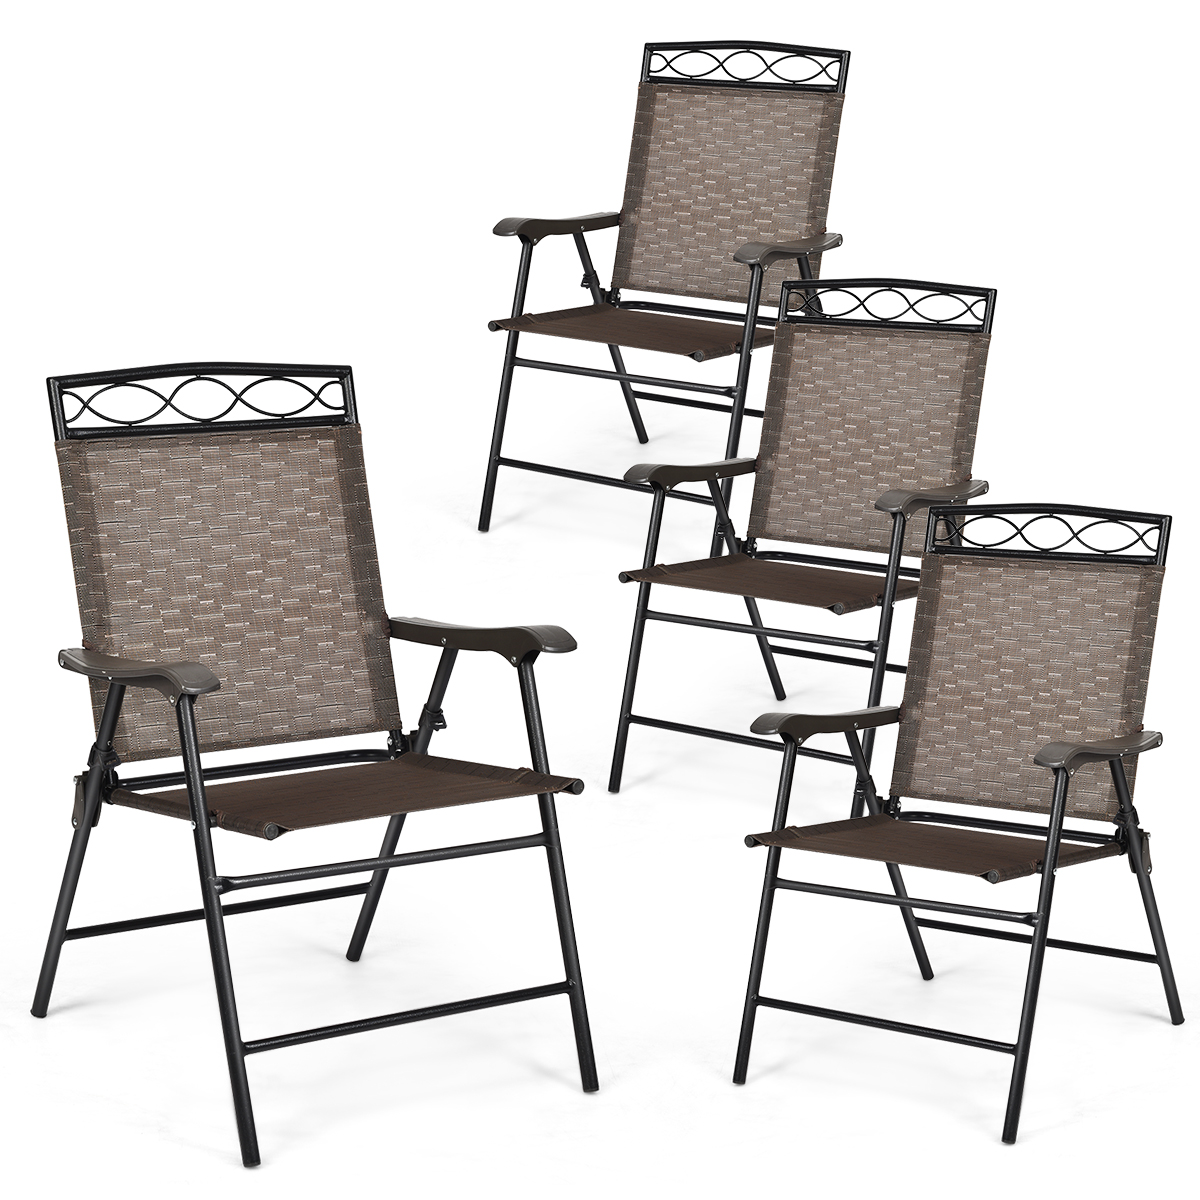 Klappstuhl 4er Set weiß Terrassenmöbel faltbarer Stuhl Campingstuhl klappbar 